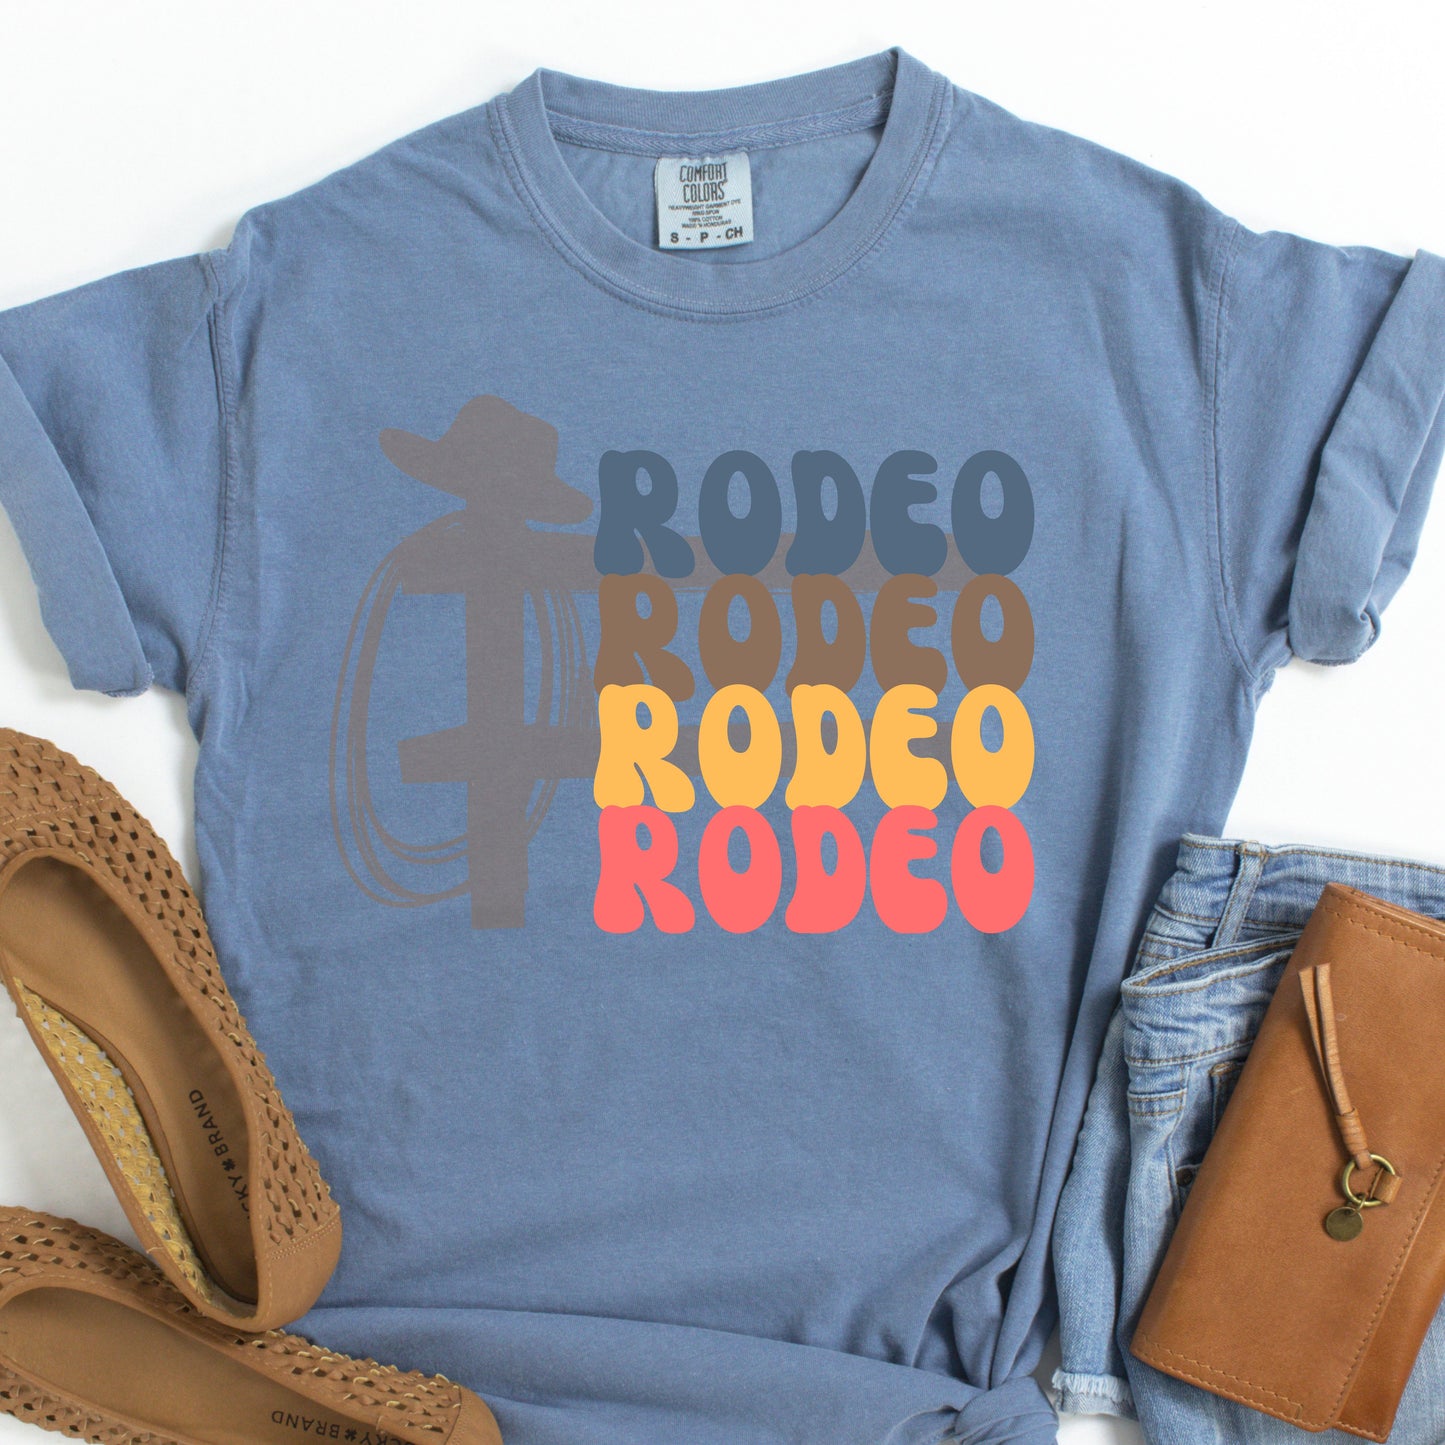 RODEO Garment-Dyed T-shirt, Western Tshirt, Gifts for Her, Rodeo Shirt, Tshirt for Rodeo, Cowgirl Tshirt, Western Shirt, Shirt for Rodeo